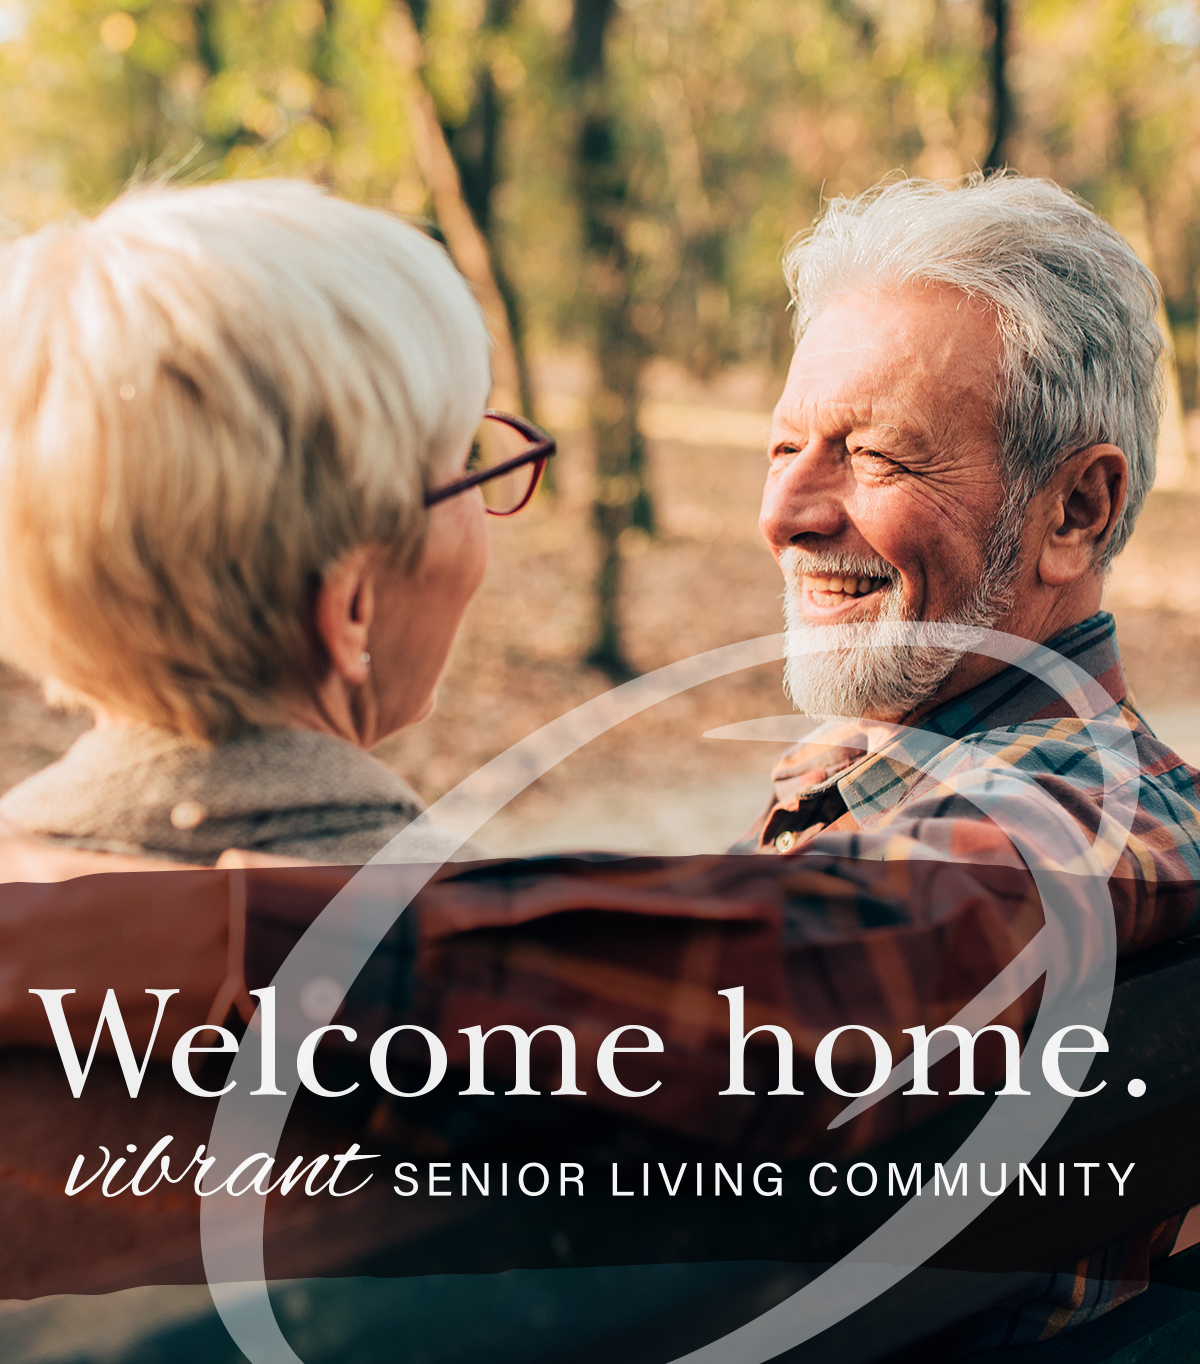 Senior Living Retirement Communities near my Location